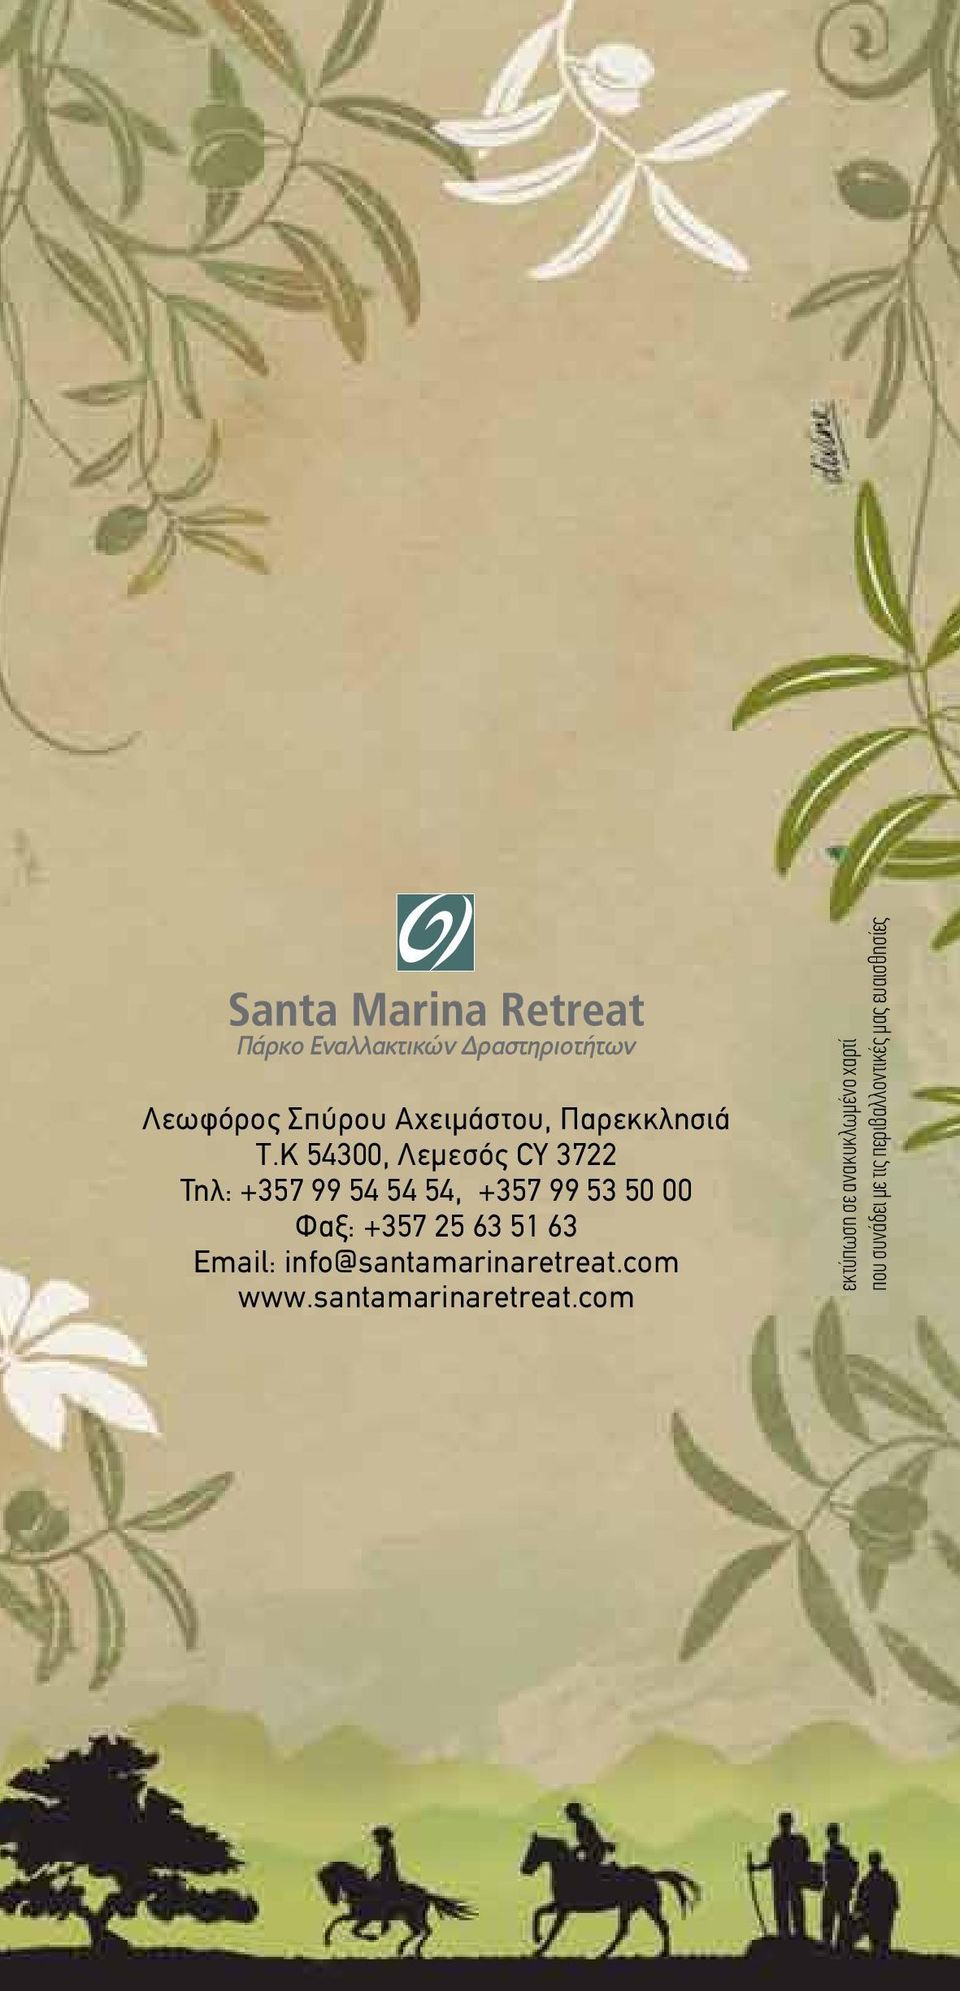 25 63 51 63 Email: info@santamarinaretreat.